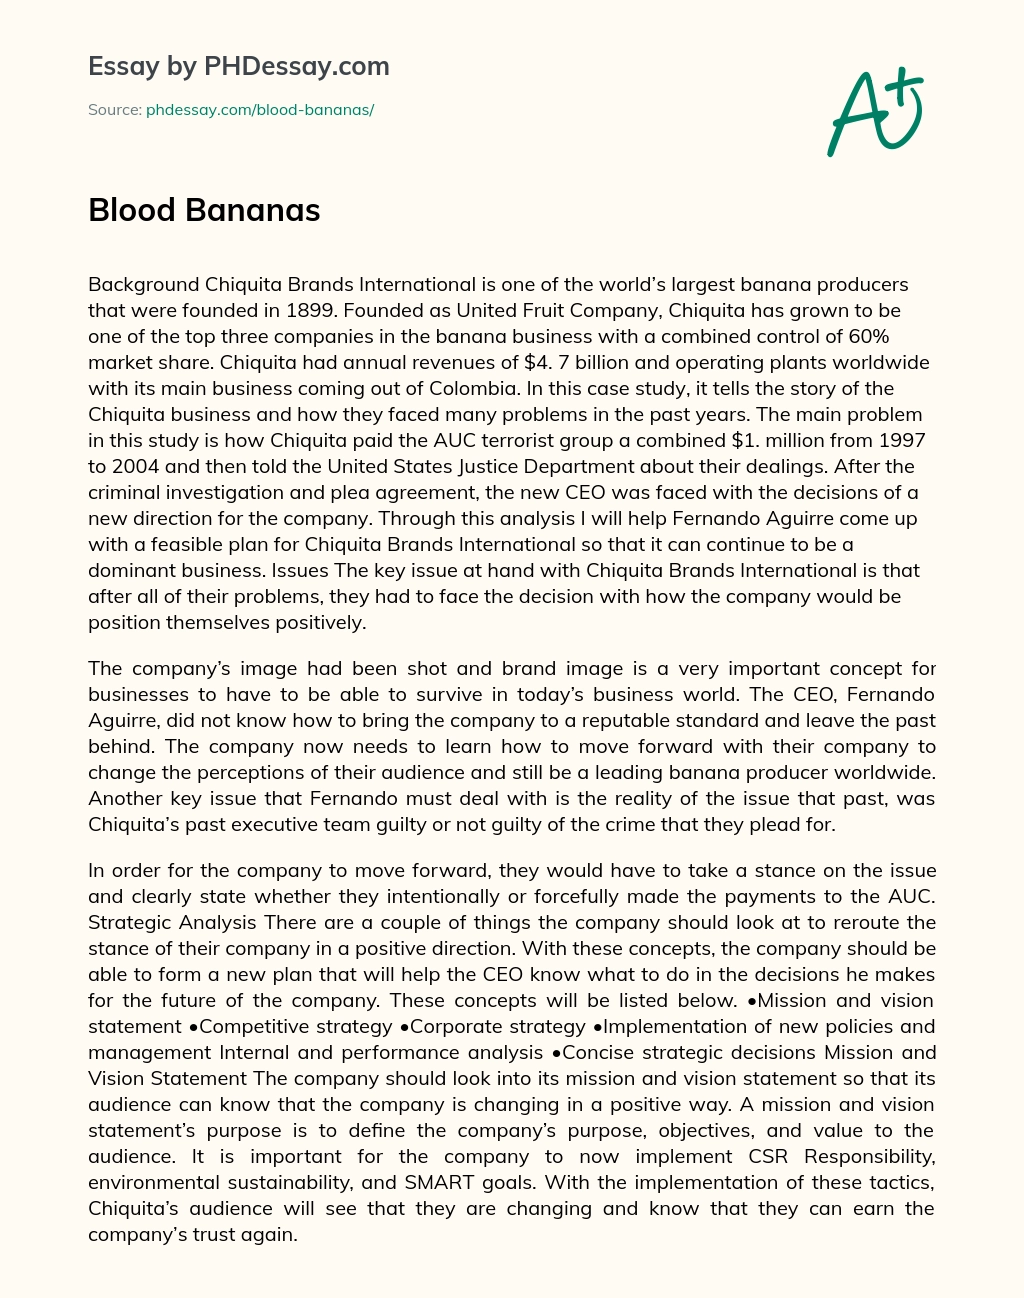 Blood Bananas essay